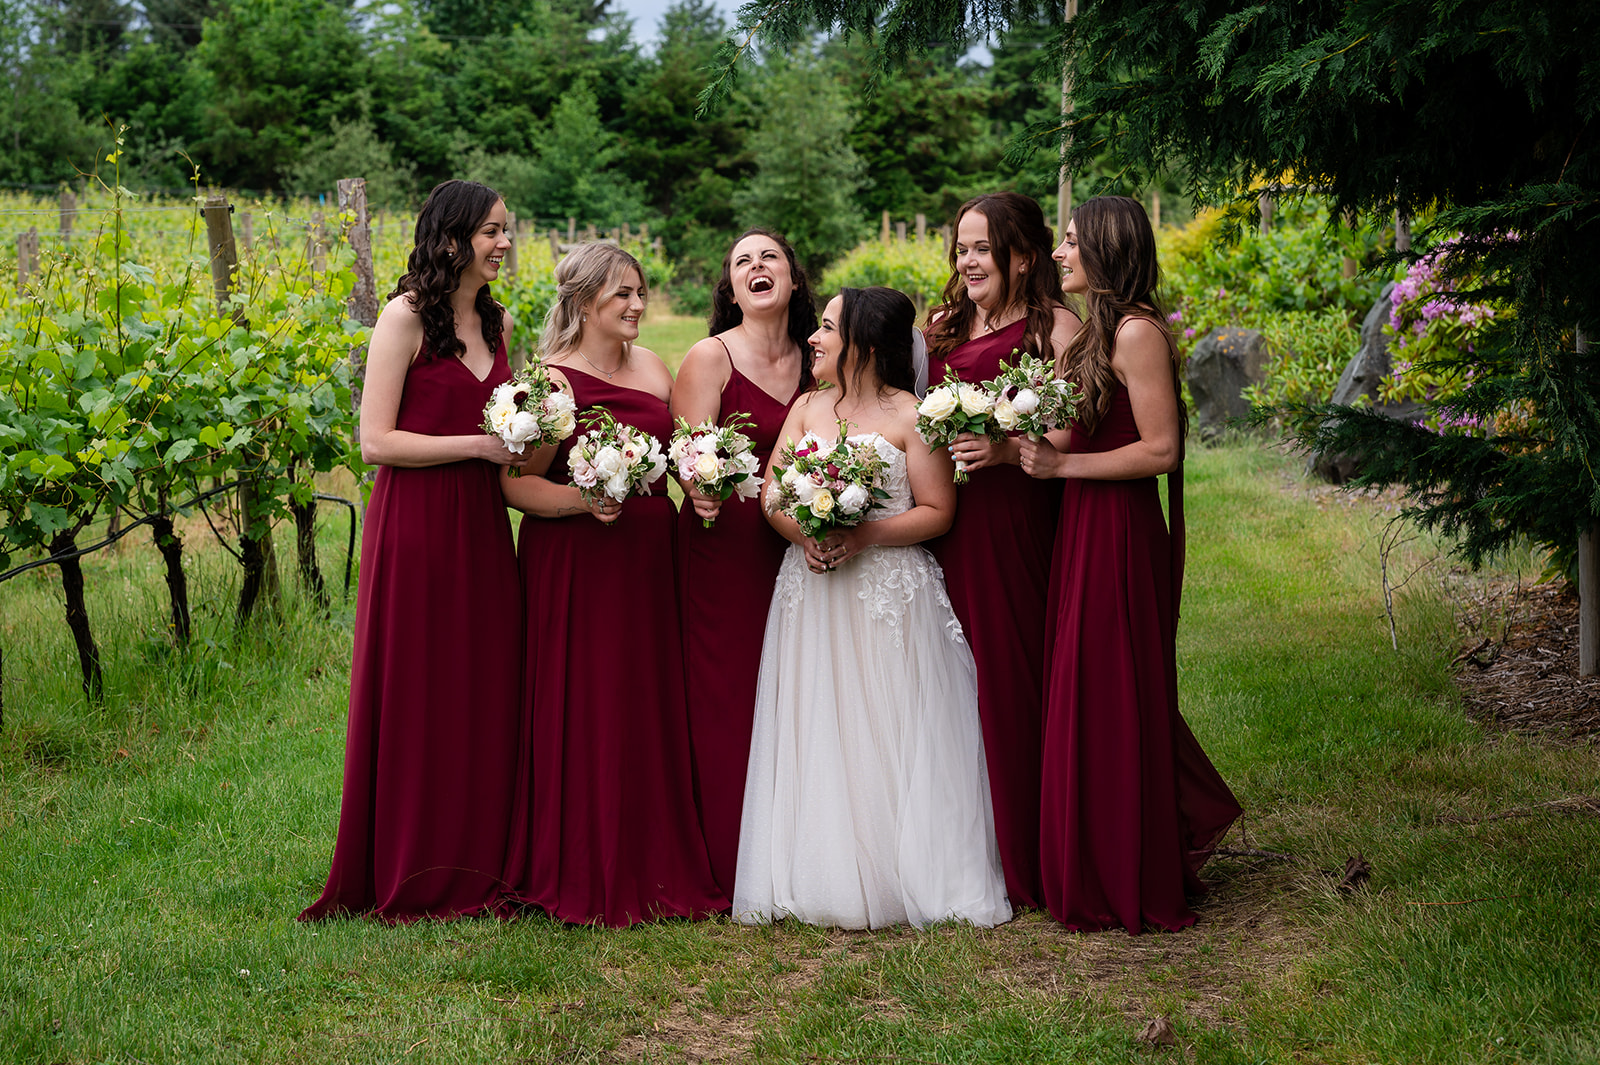 Bridal portraits at Wedding  at 40 Knots Winery on Vancouver Island